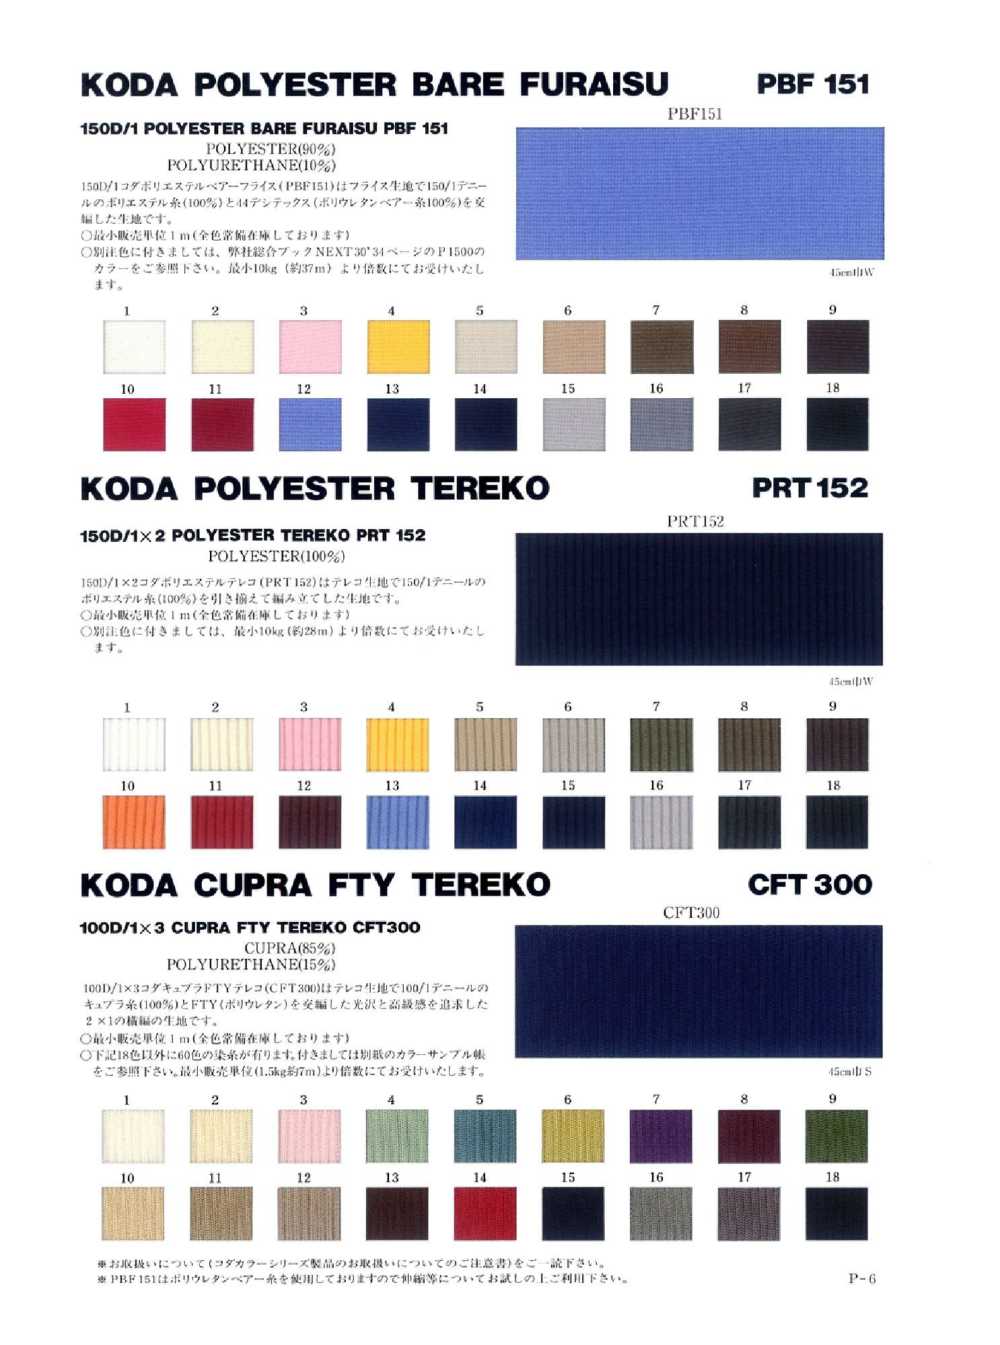 PRT152 150d / 2 Polyester Vải Tereko[Vải Rib] TIẾP THEO30